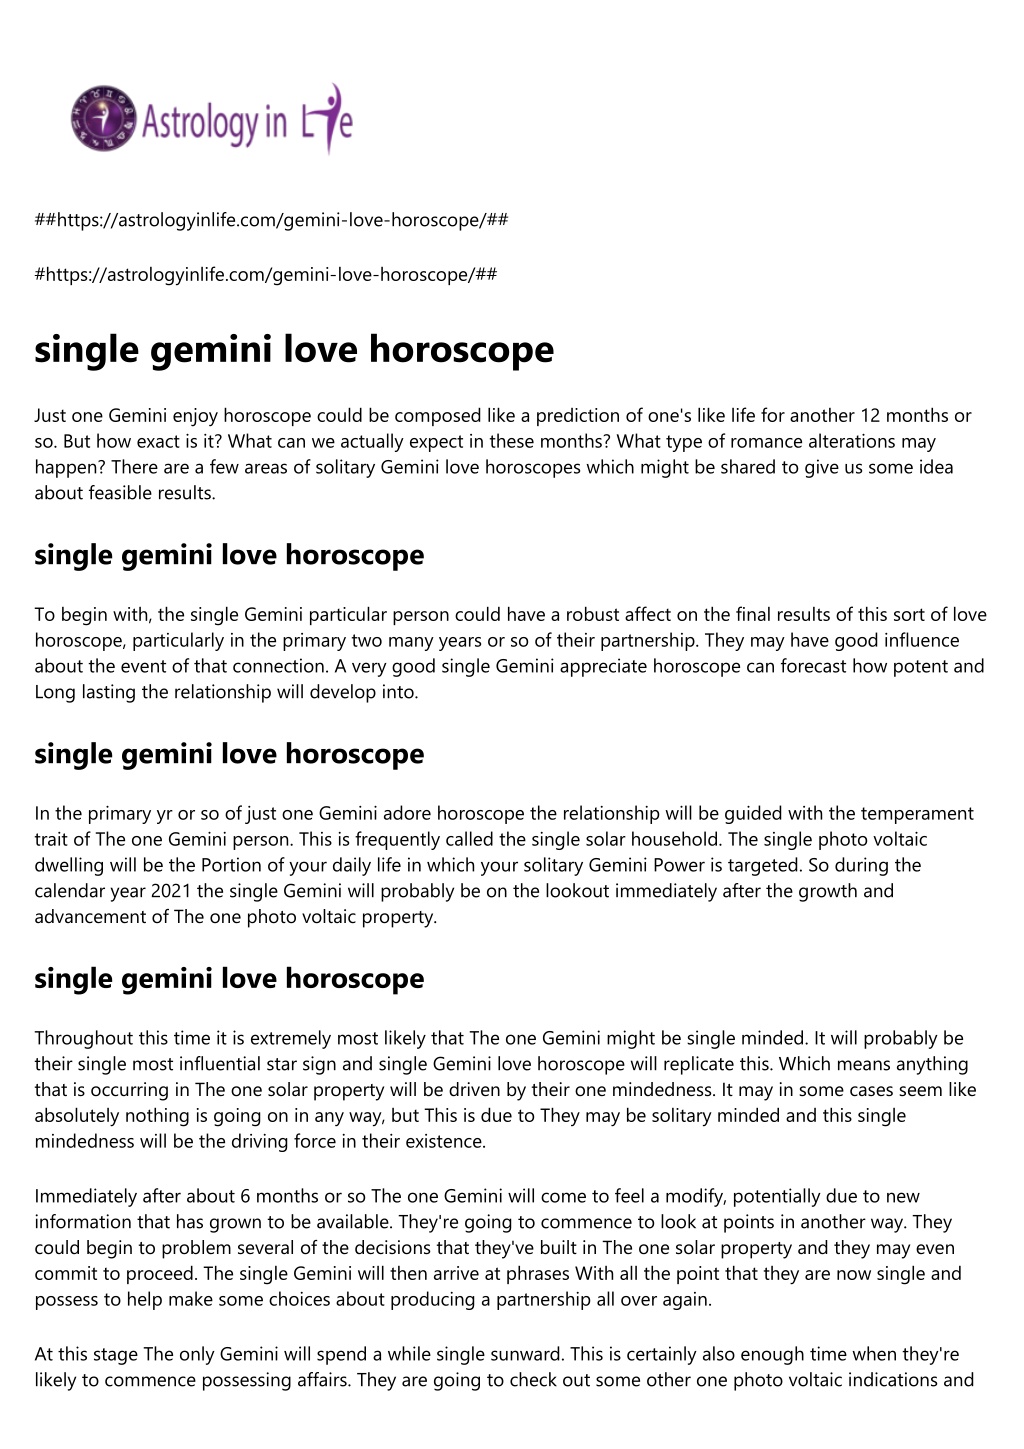 PPT single gemini love horoscope PowerPoint Presentation, free